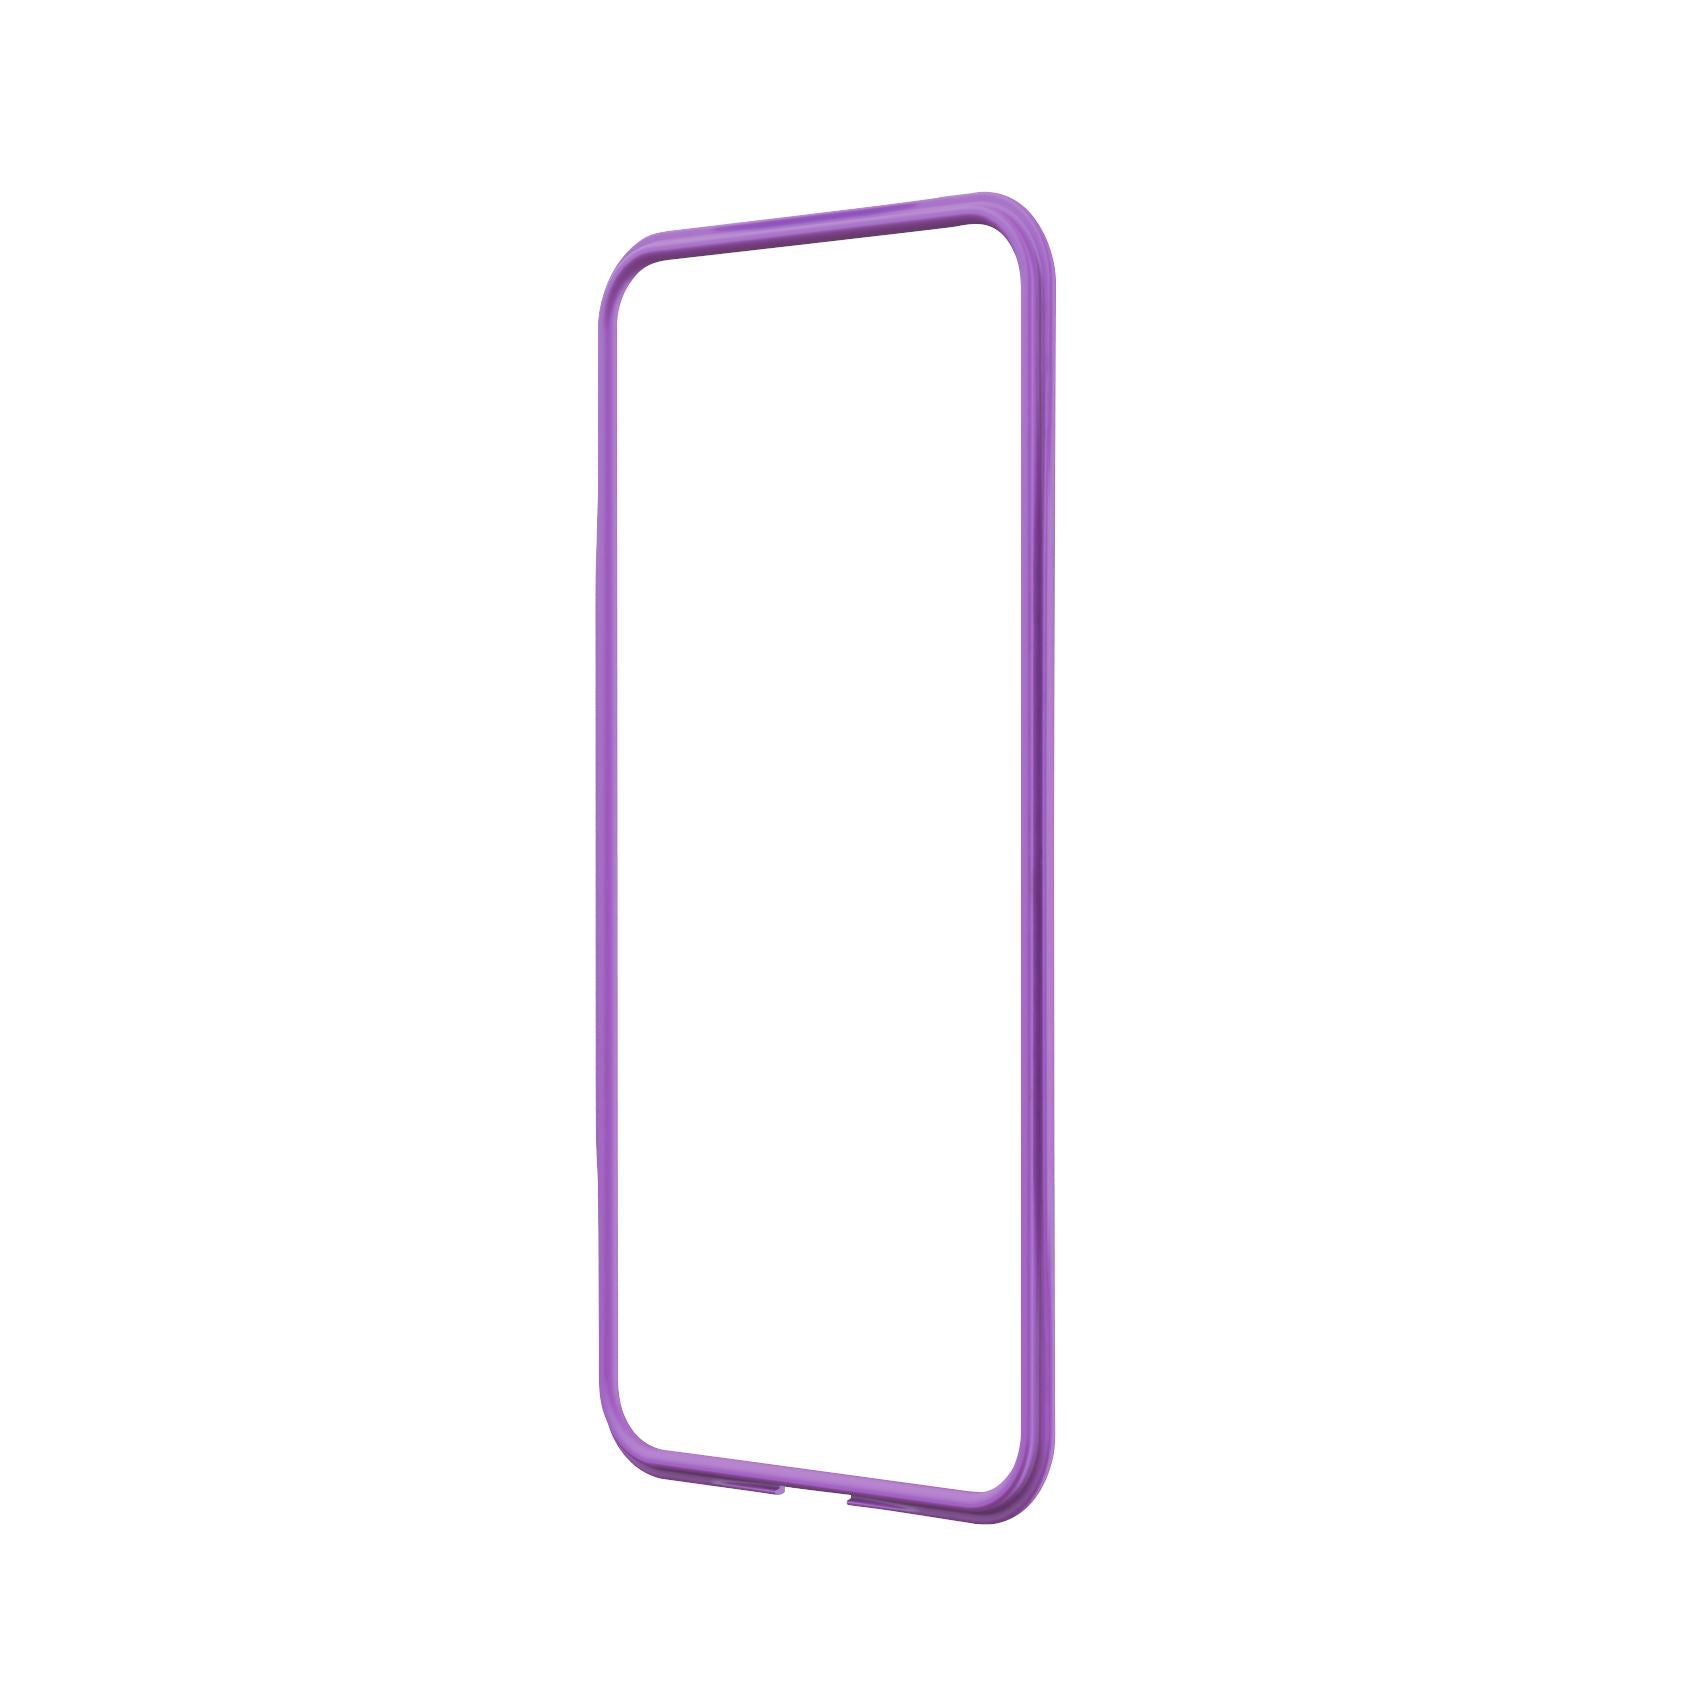 RhinoShield Mod NX Modular Case for iPhone 12 Series (2020) iPhone 12 Series RhinoShield iPhone 12/12 Pro 6.1" Purple (Rim) 